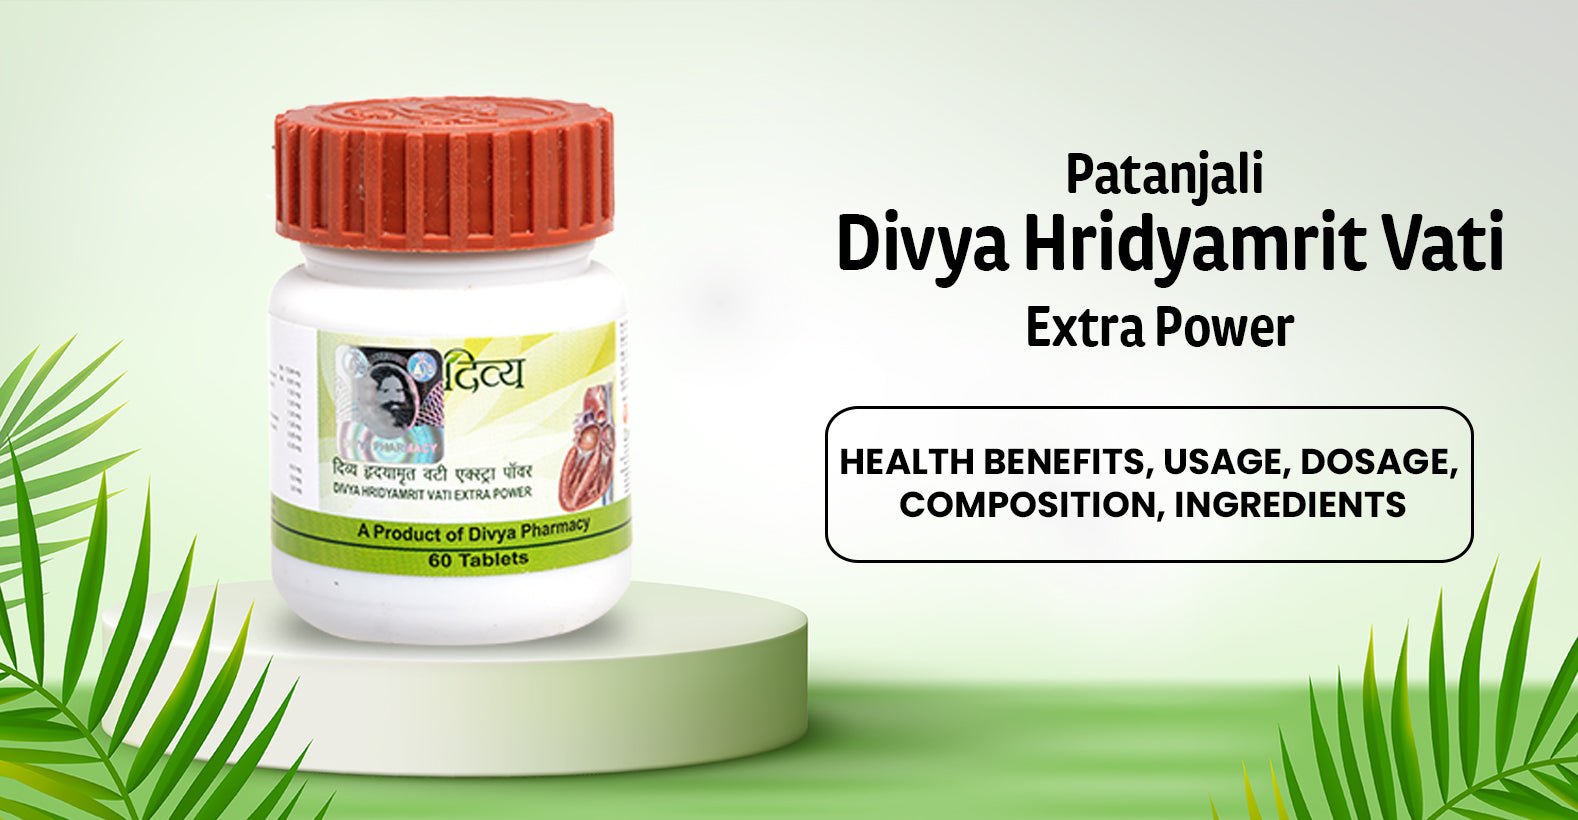 Patanjali Divya Hridyamrit Vati Extra Power - Ingredients, Composition, Properties, Health Benefits, Usage